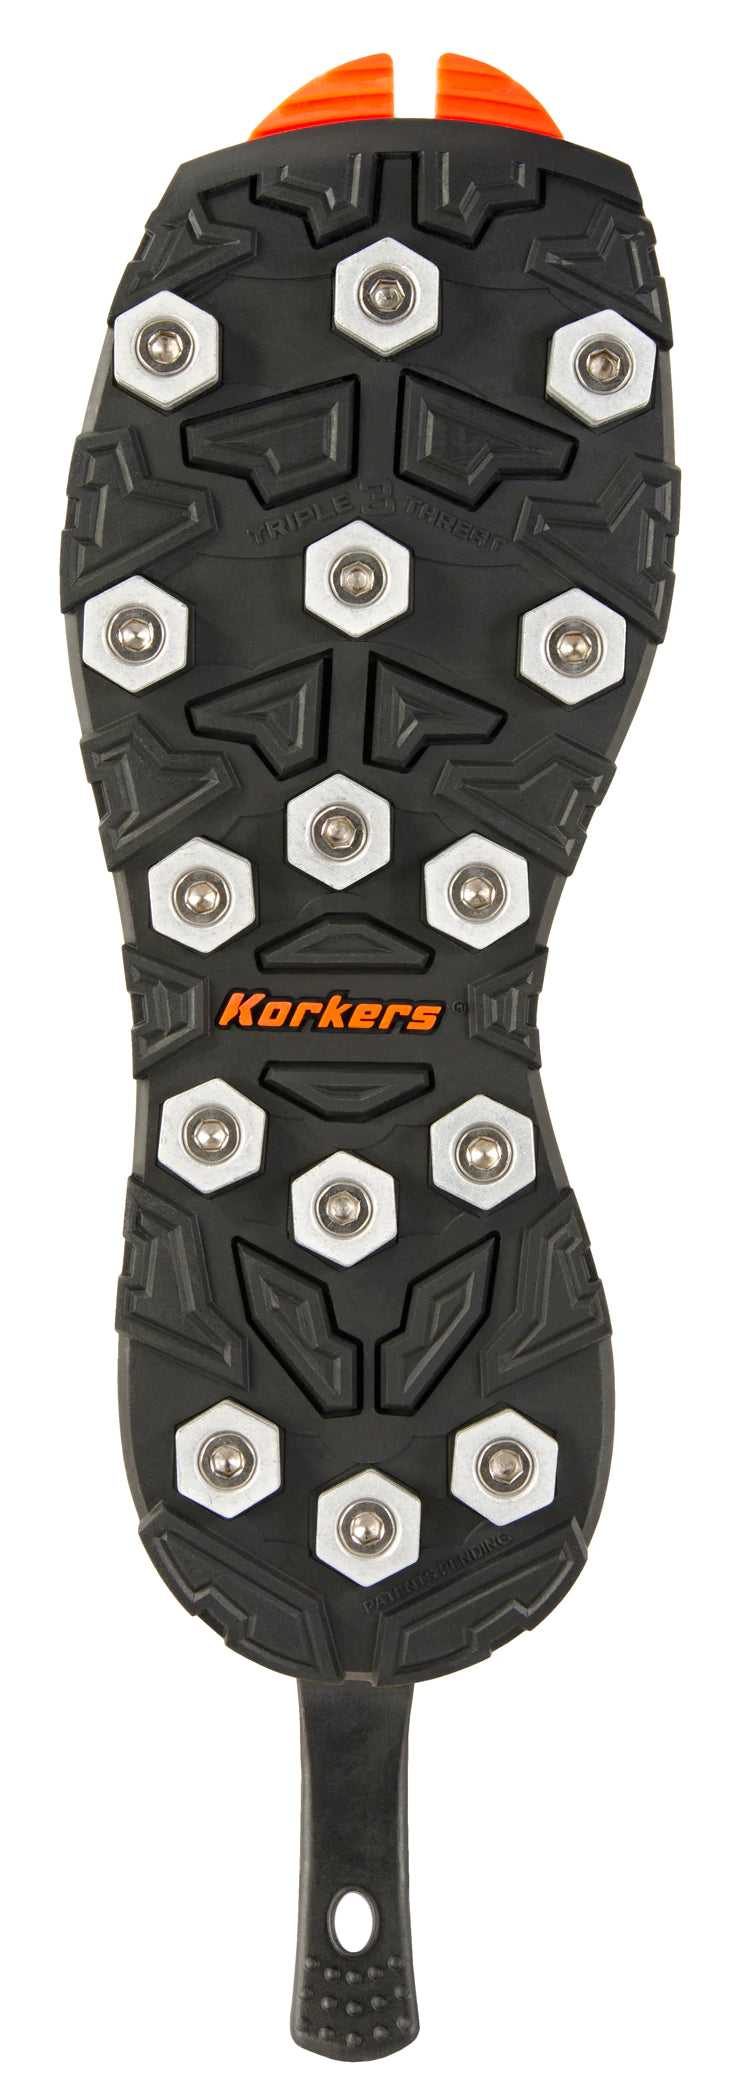 Korkers OmniTrax v3.0 Interchangeable Sole - Triple Threat Aluminum Hex Disc